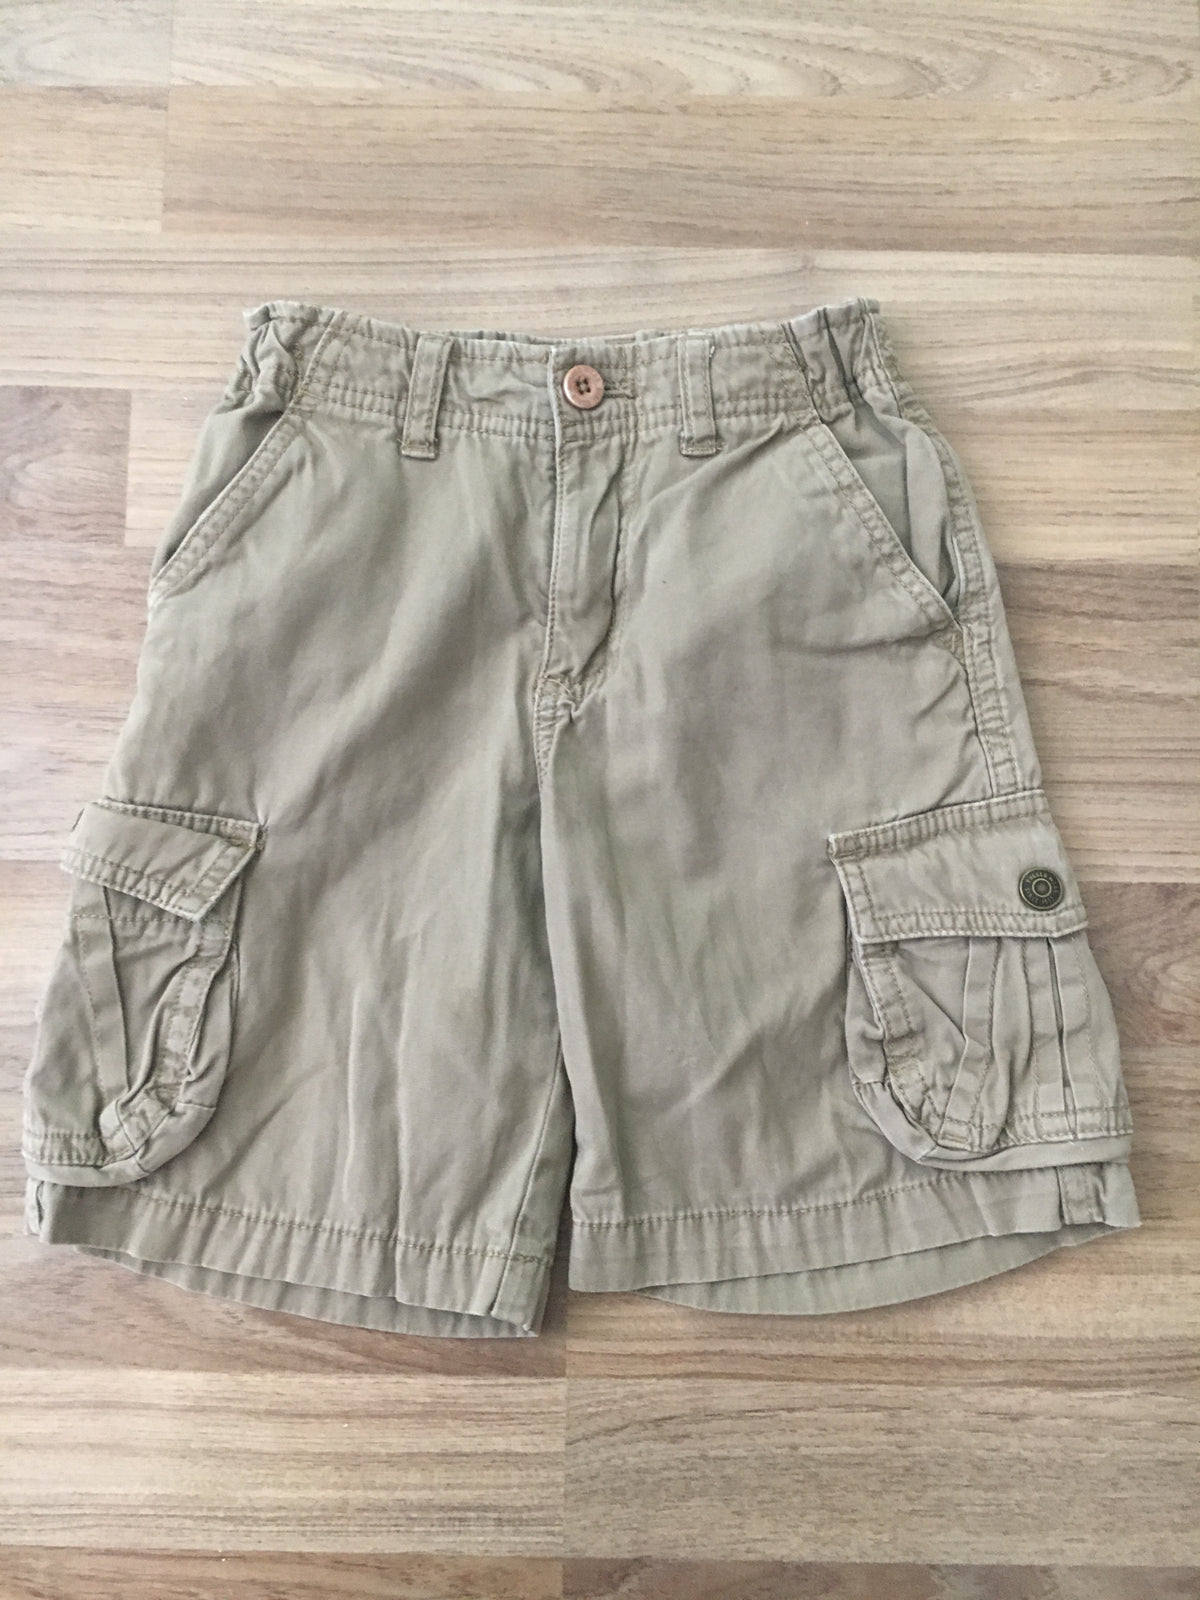 Shorts (Boys Size 4)